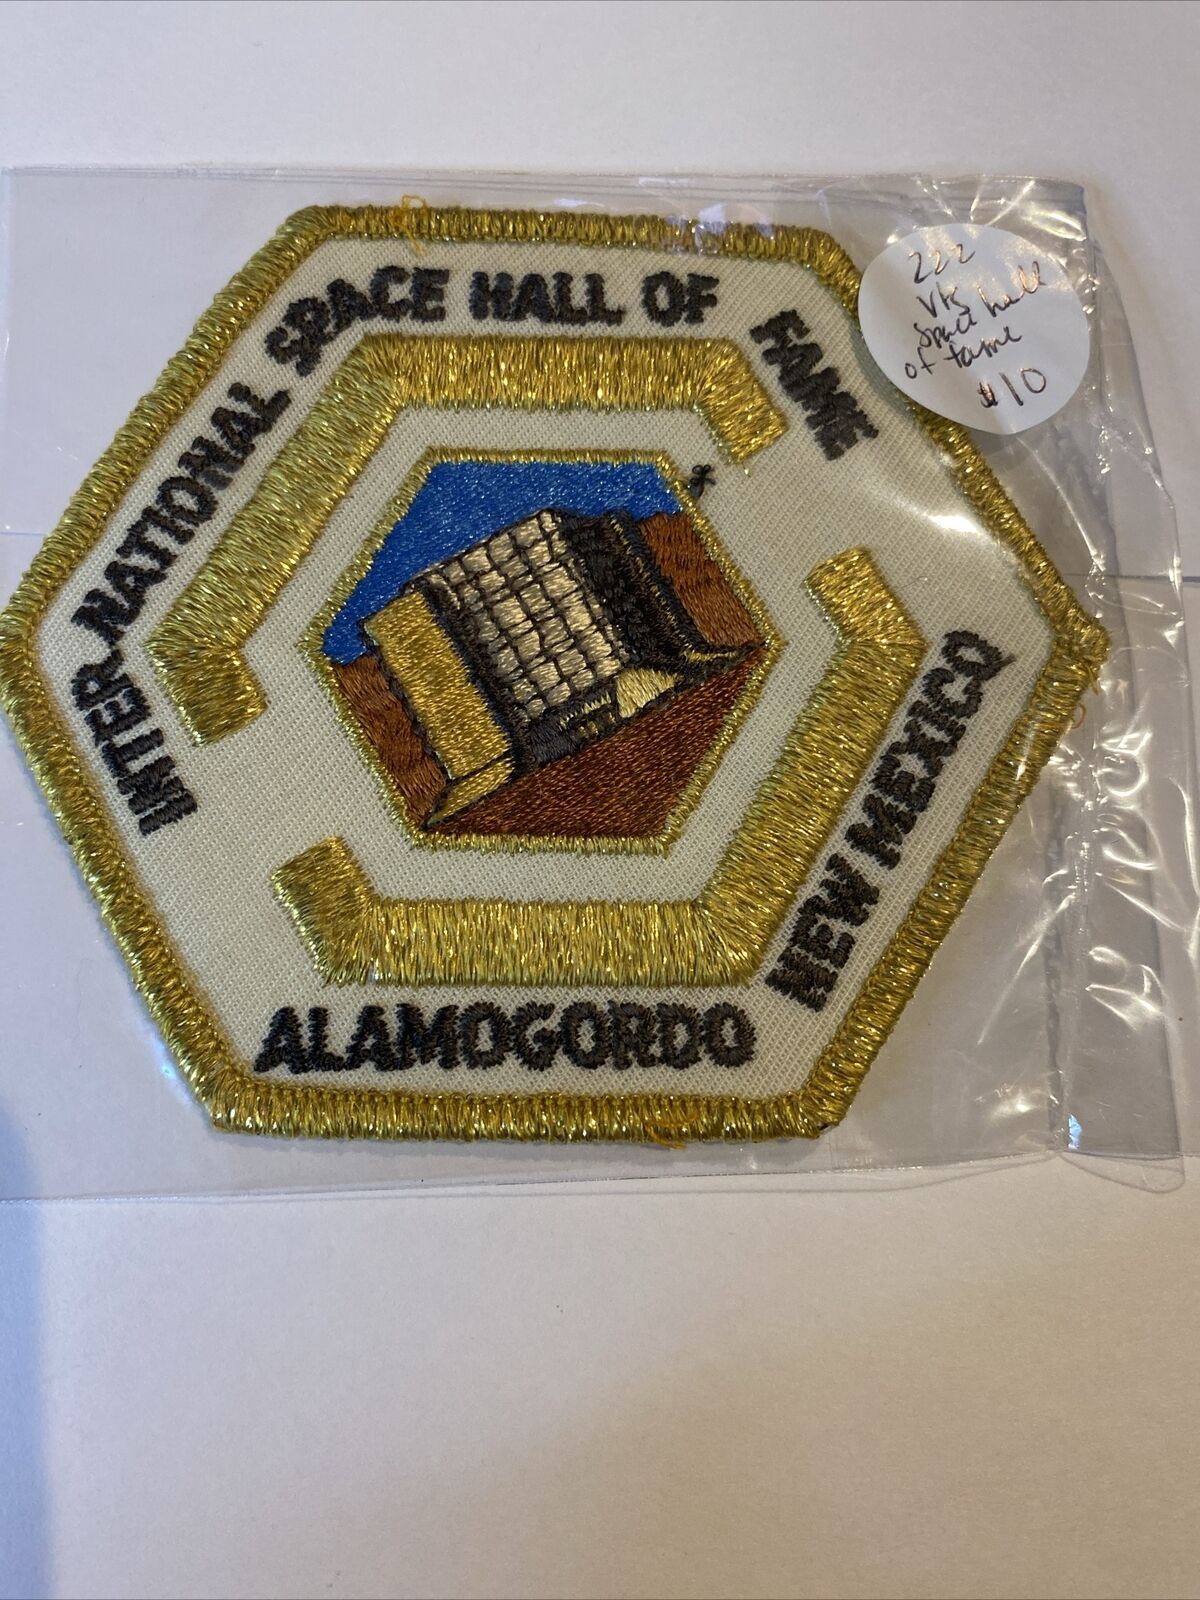 Vintage International Space Hall Of Fame Patch. Alamogordo New Mexico NASA